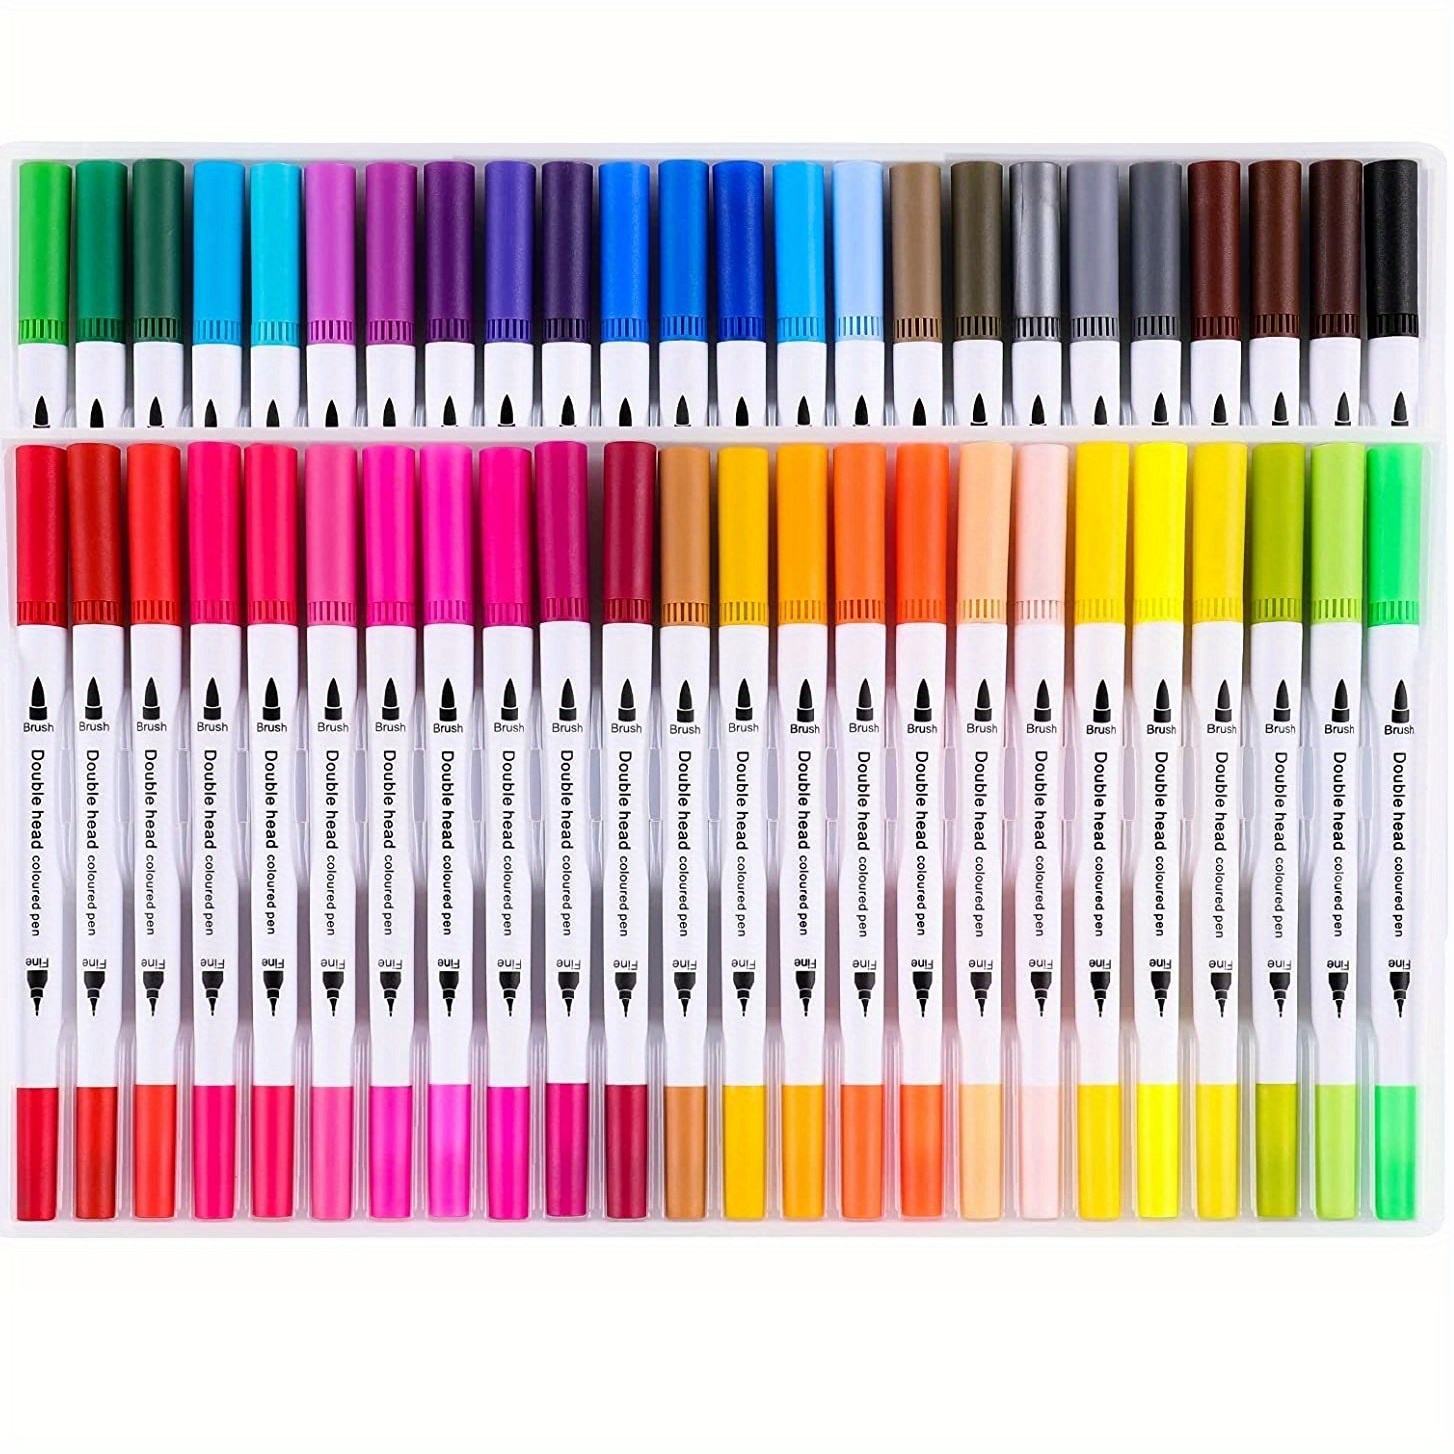 Dual Brush Marker Pens for Coloring Books, Fine Tip, Pen Set for